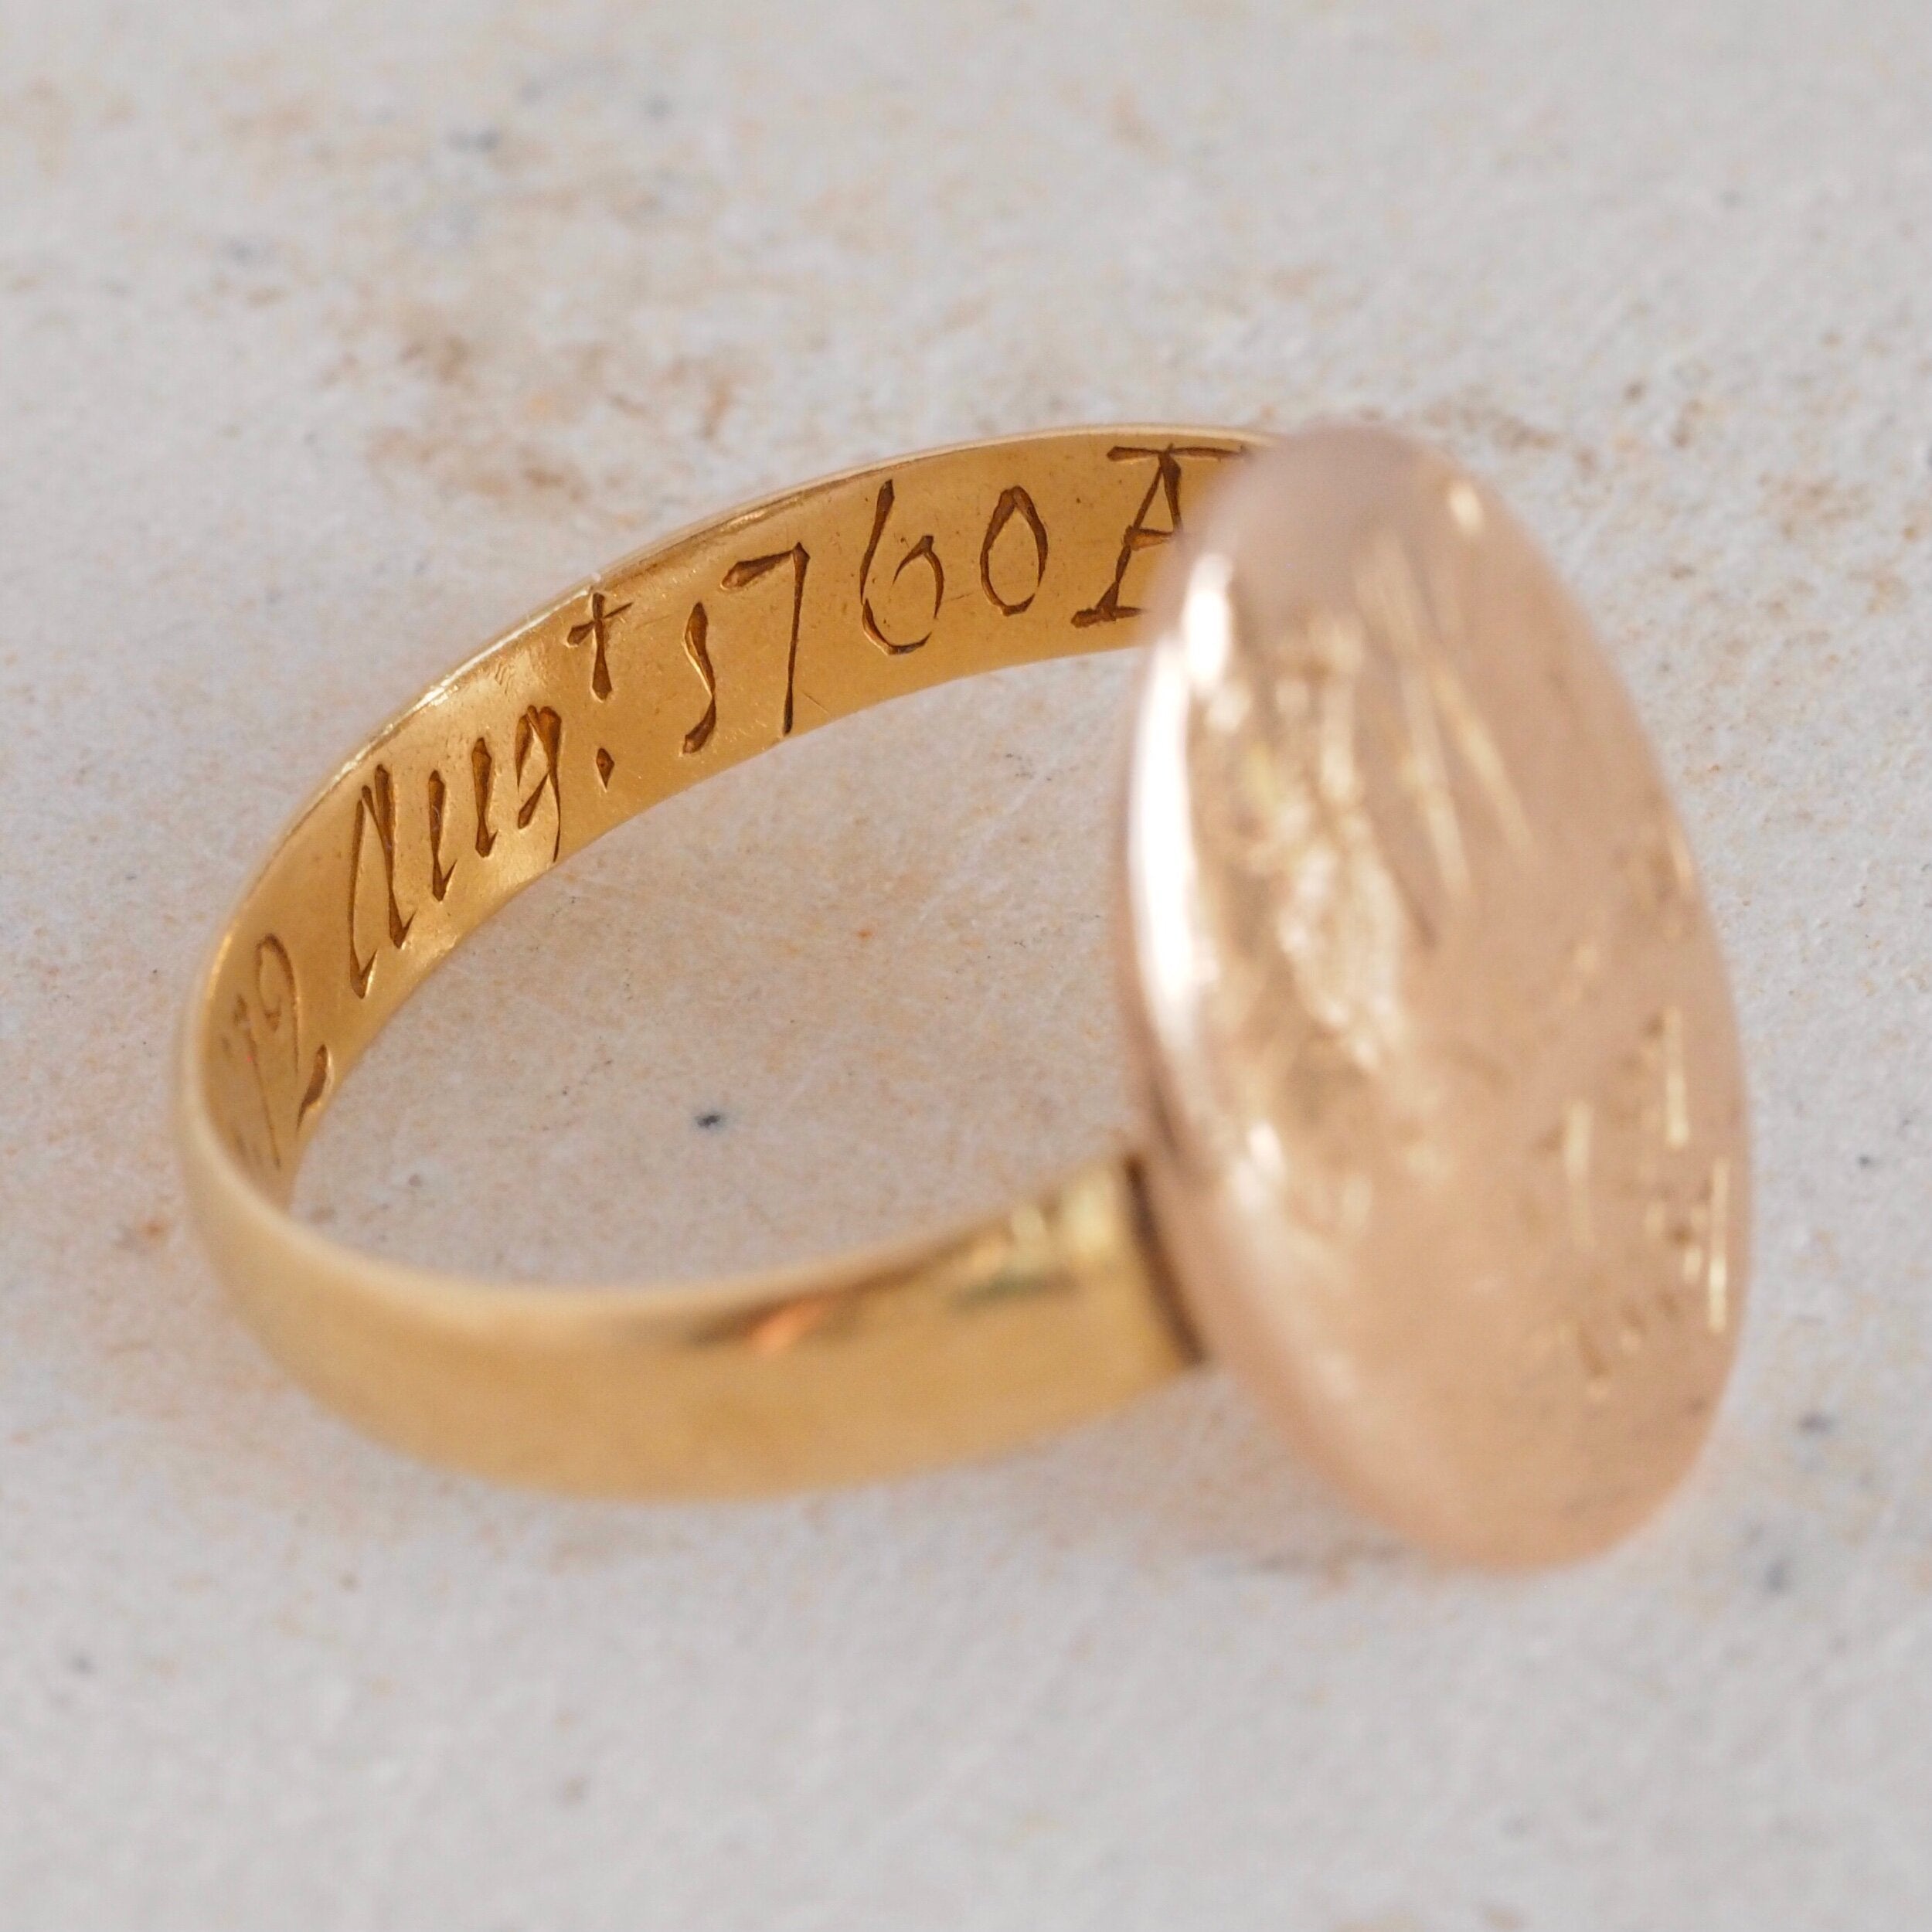 Antique Pre-Revolution American 22k Gold & 18k Gold Signet Ring